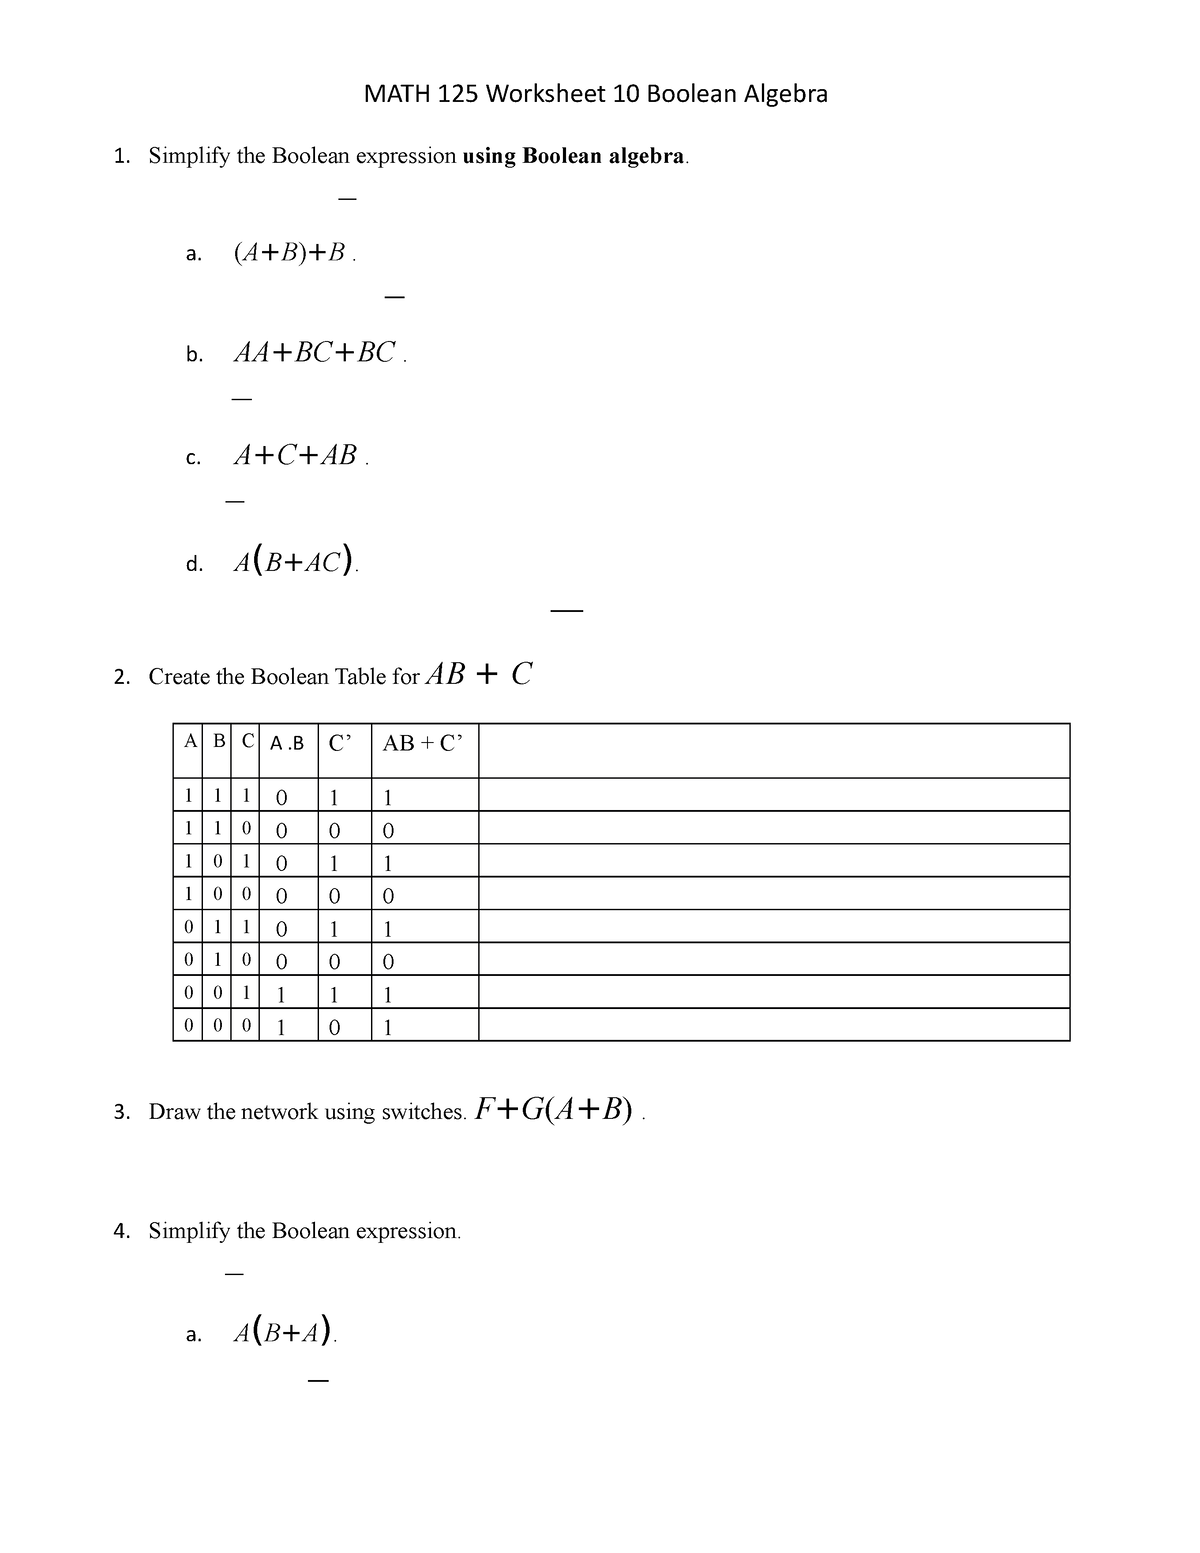 bit112-tutorial-2-logic-math-125-worksheet-10-boolean-algebra-simplify-the-boolean